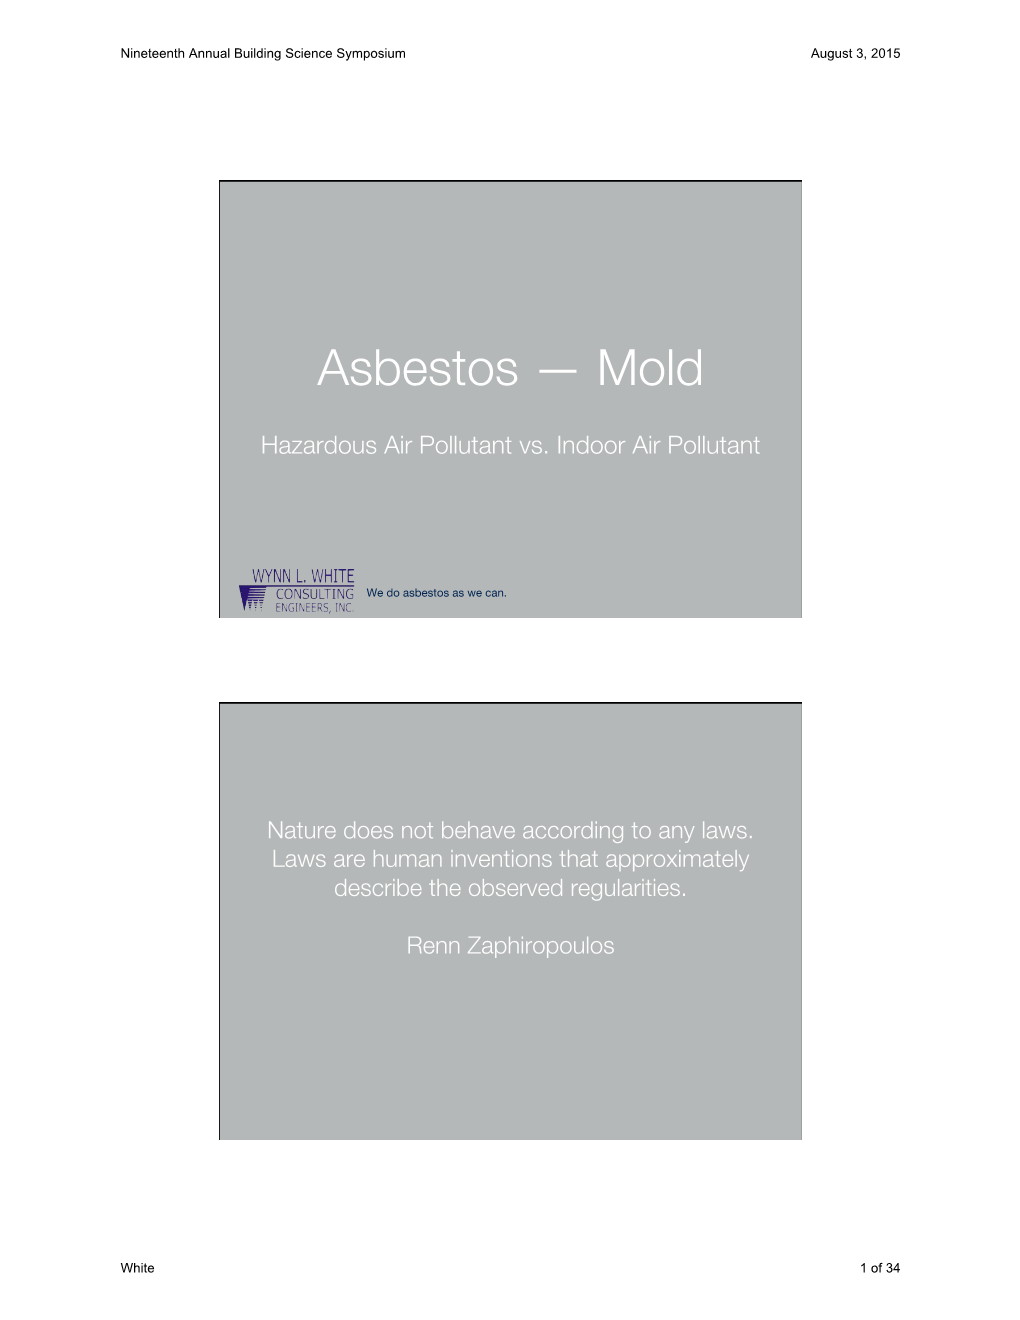 Asbestos Mold BSC 2015.Pptx